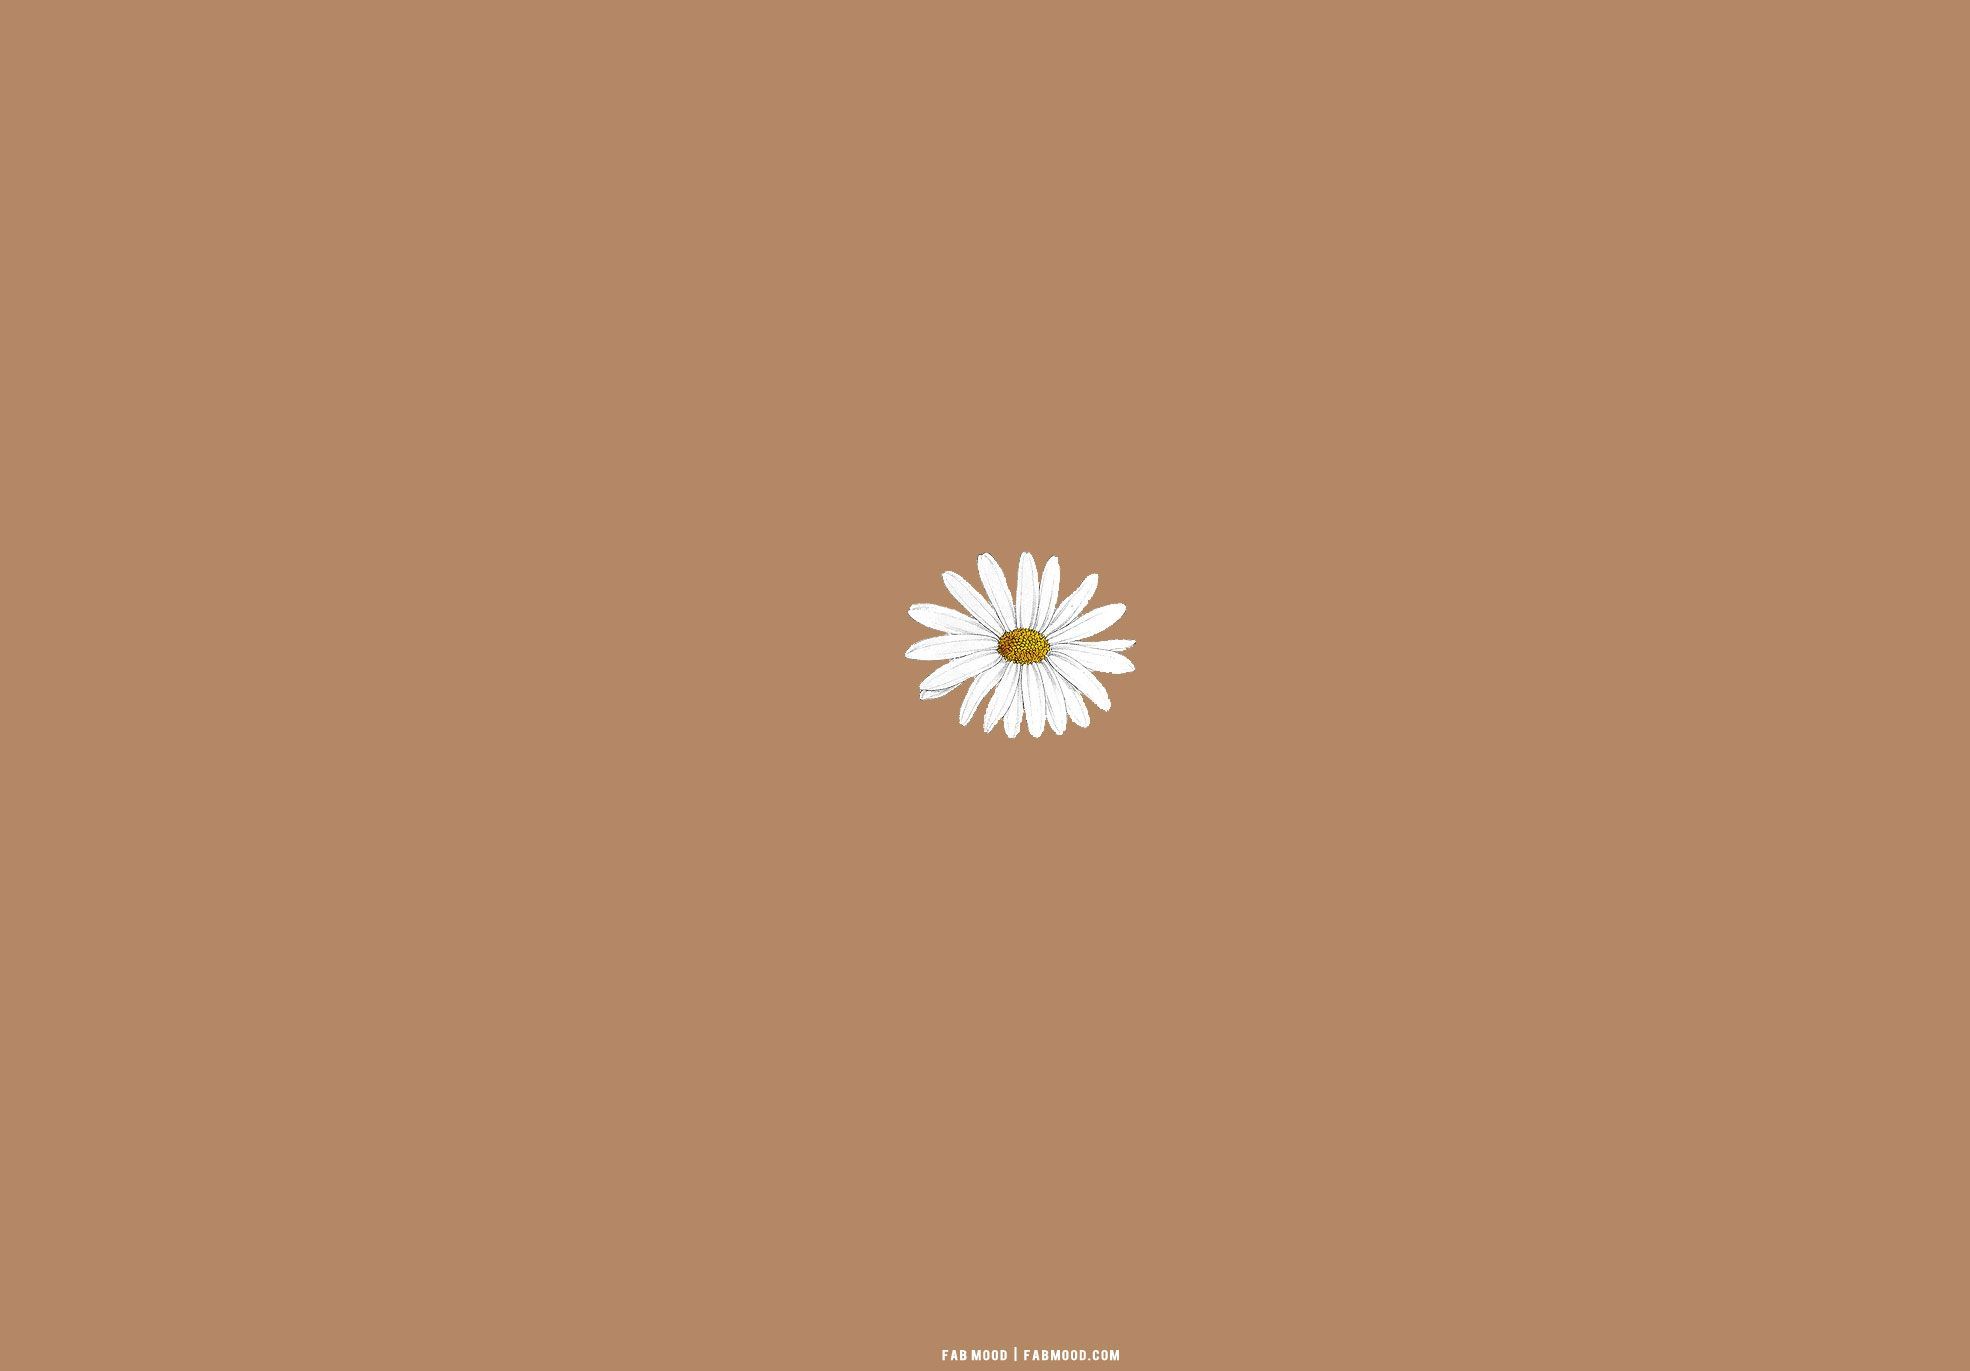  Aesthetic Hintergrundbild 1970x1371. Brown Aesthetic Wallpaper for Laptop : Daisy